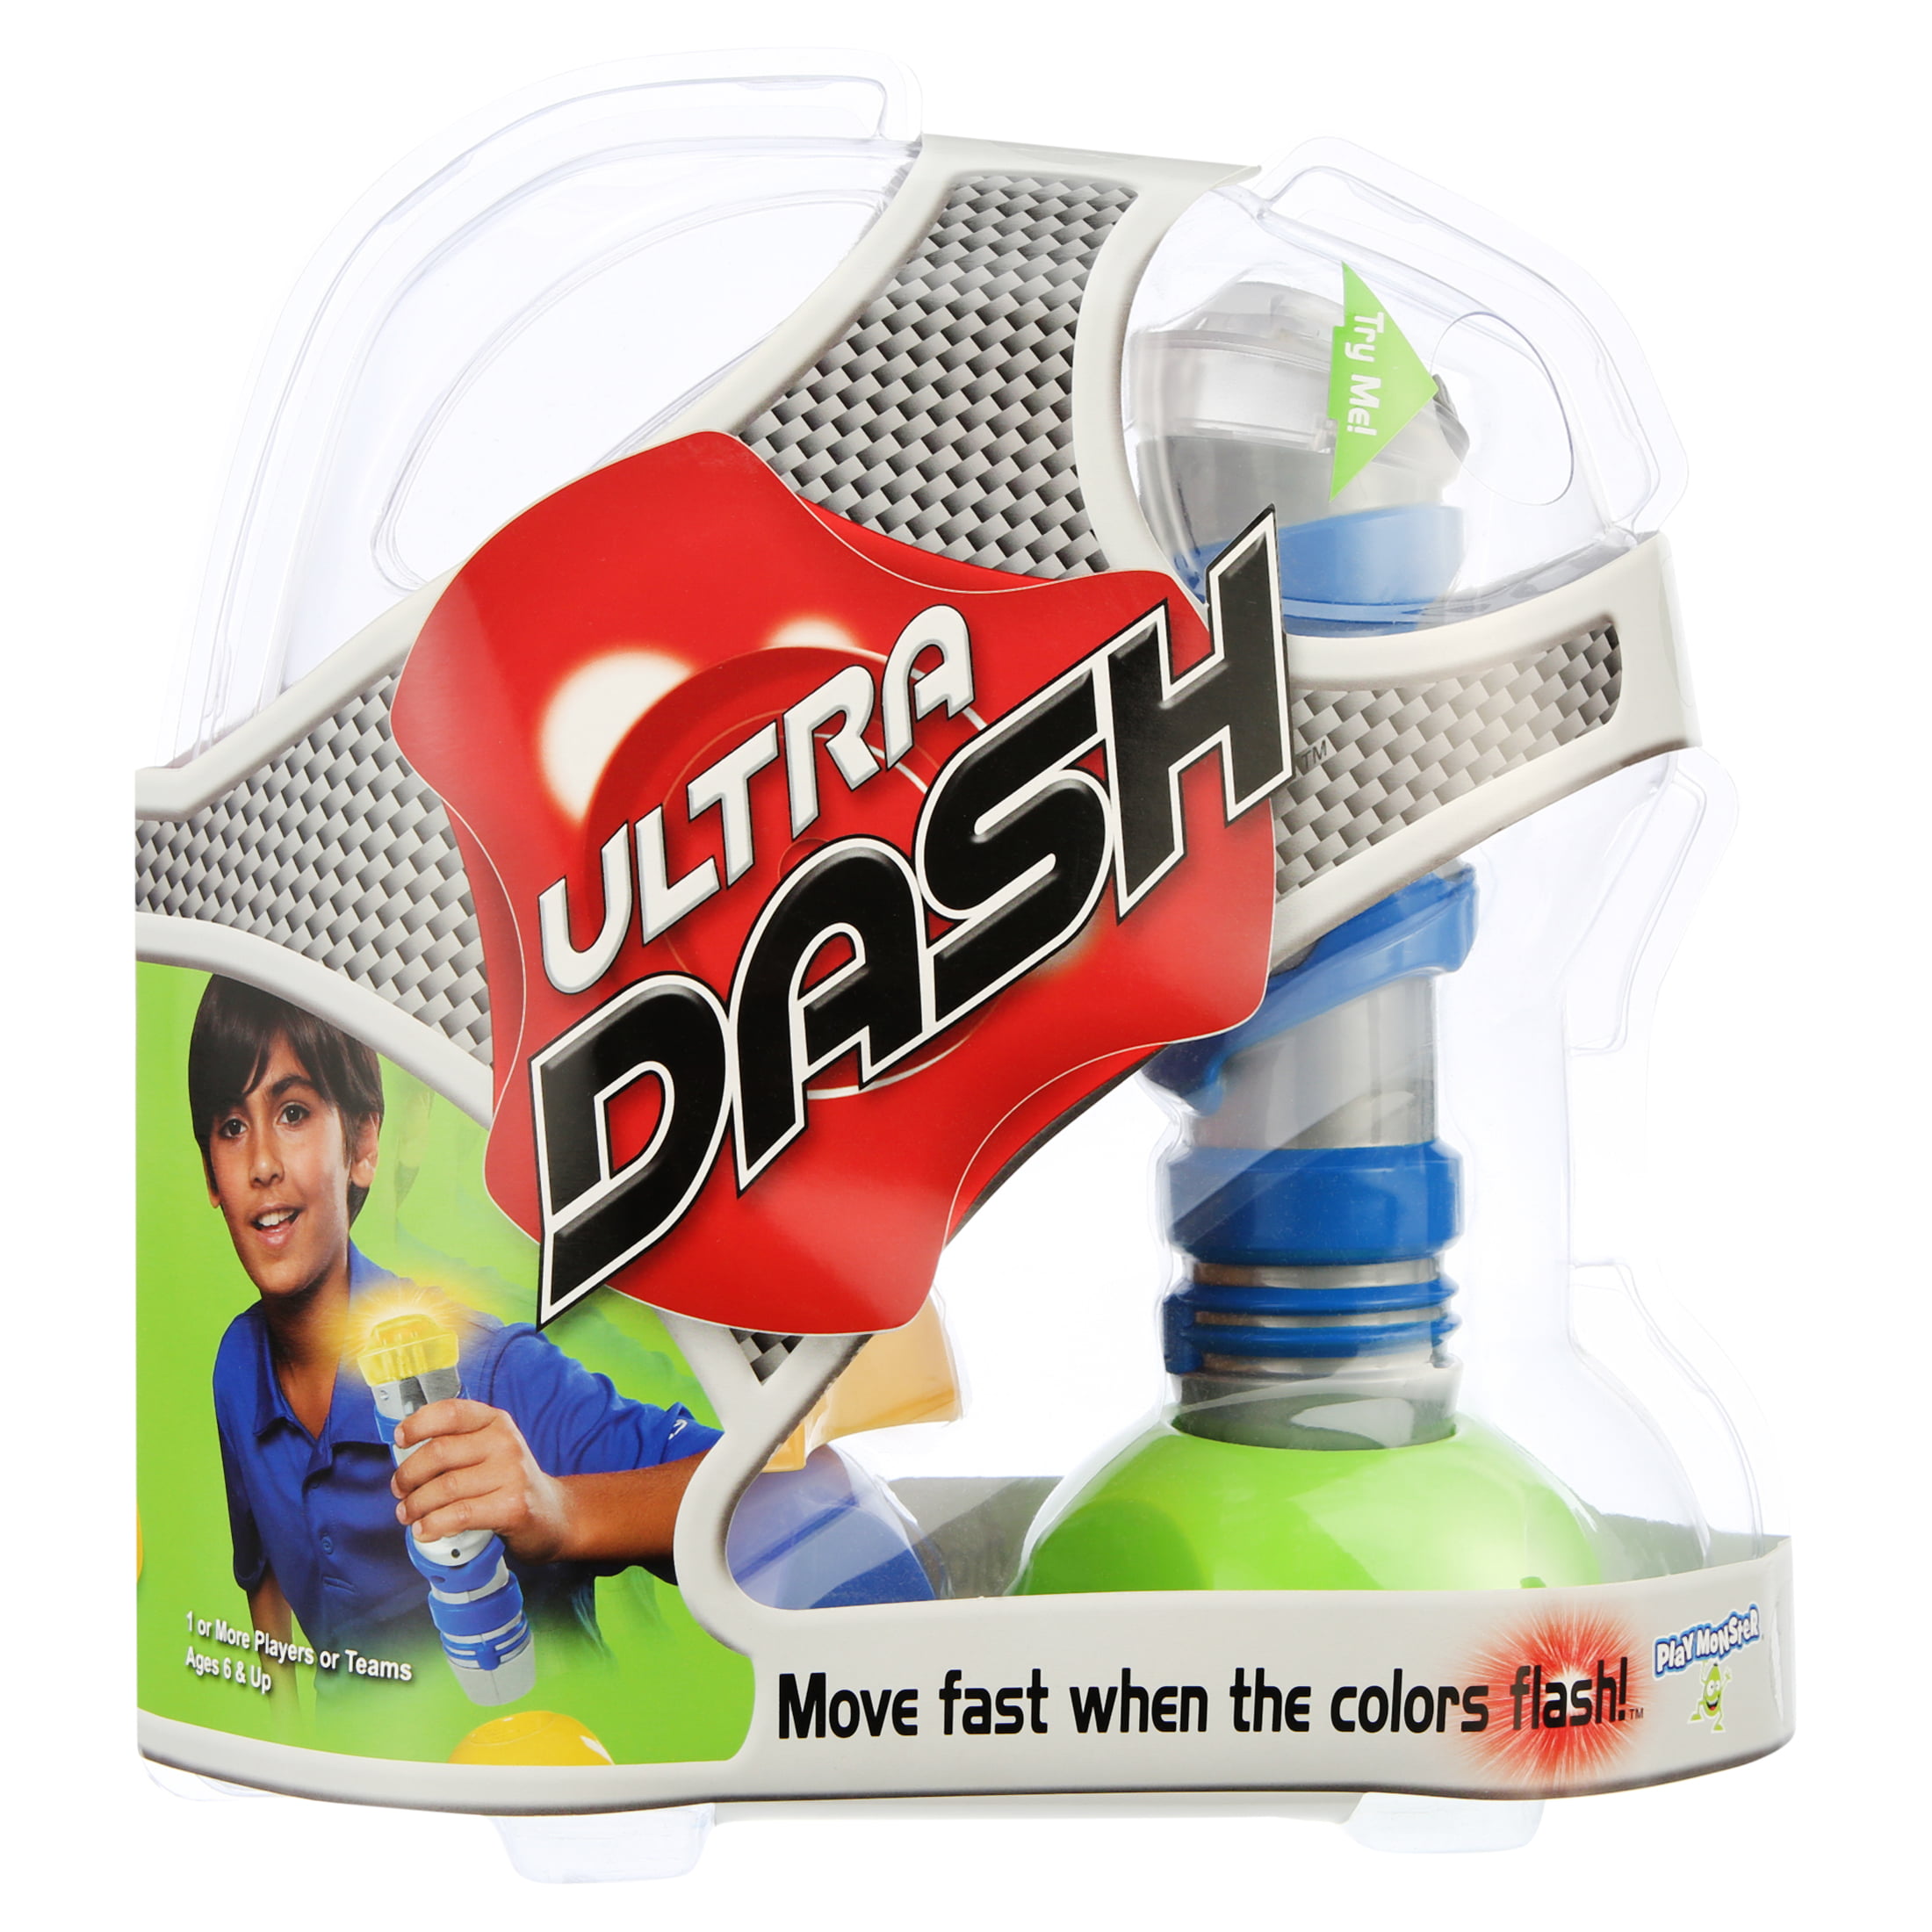 New in Box Ultra Dash Board Game Move fast when the colors flash 